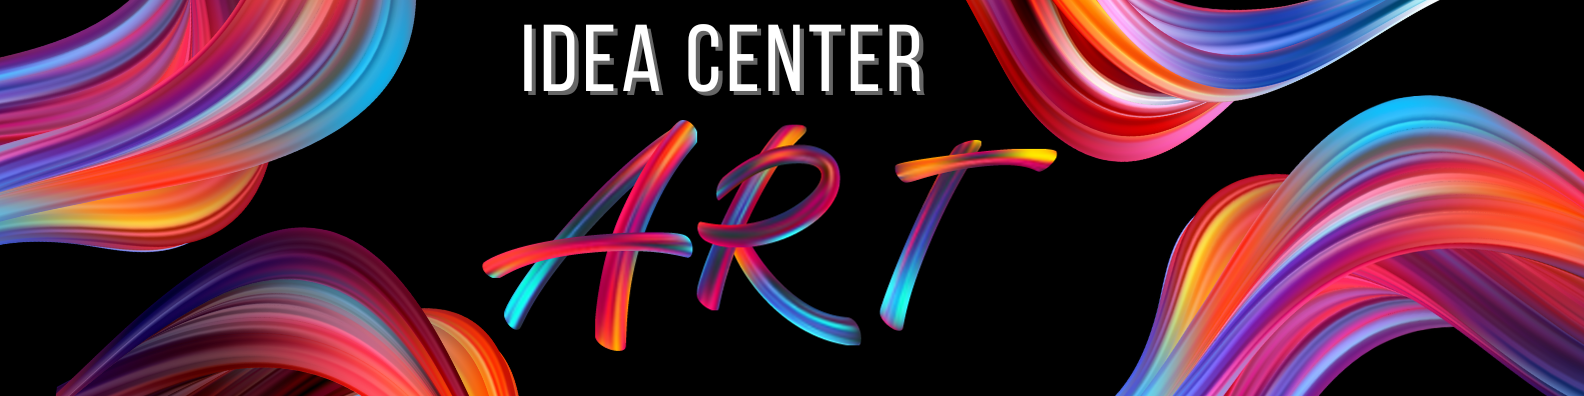 Idea Center Art